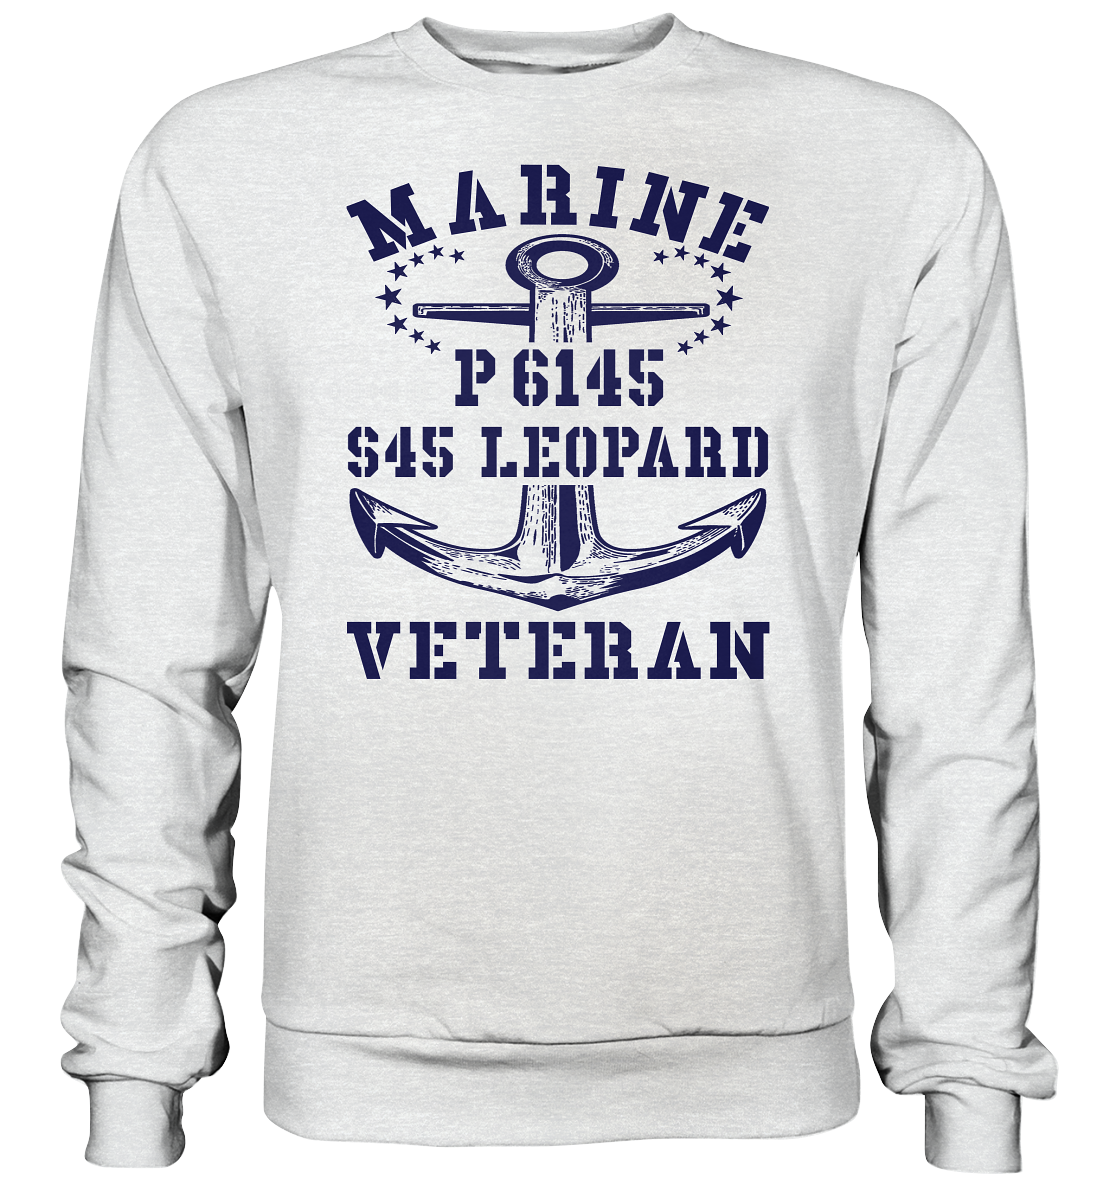 P6145 S45 LEOPARD Marine Veteran - Premium Sweatshirt